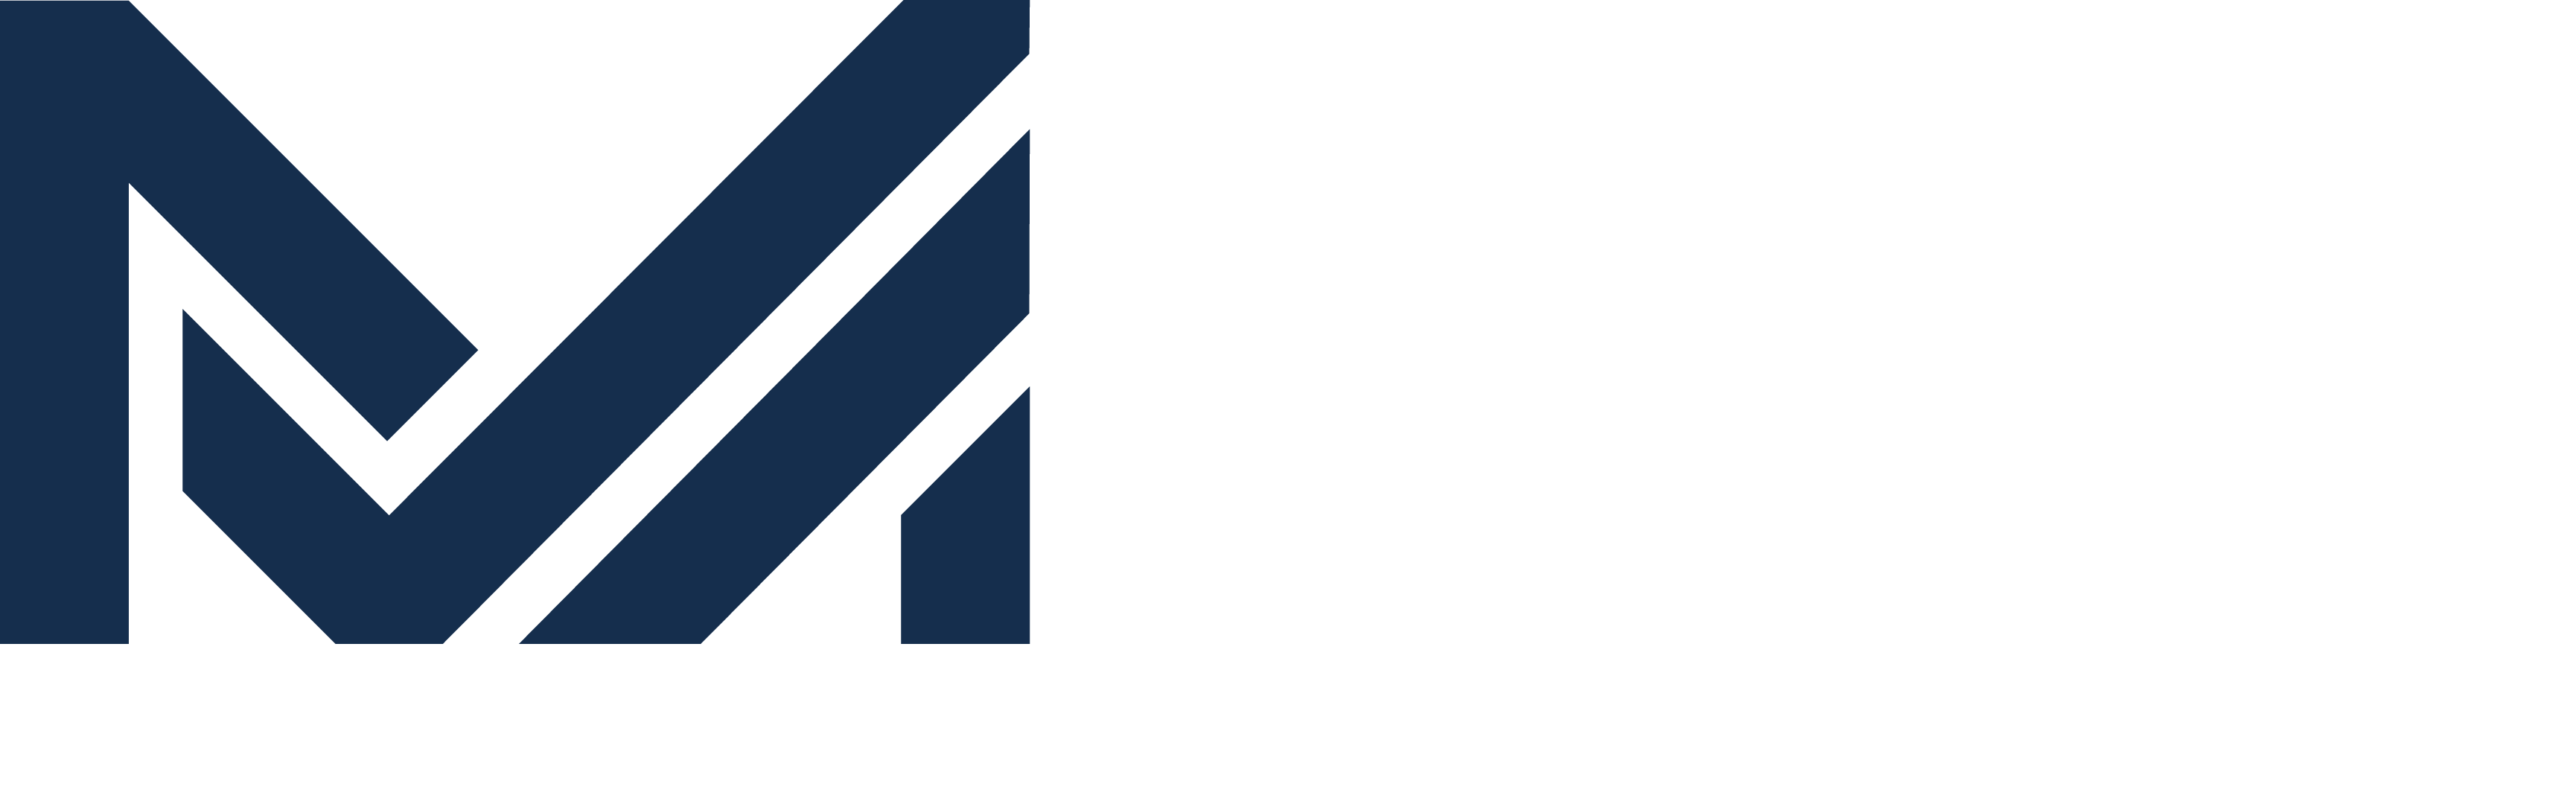 Prof Diogo Moreira